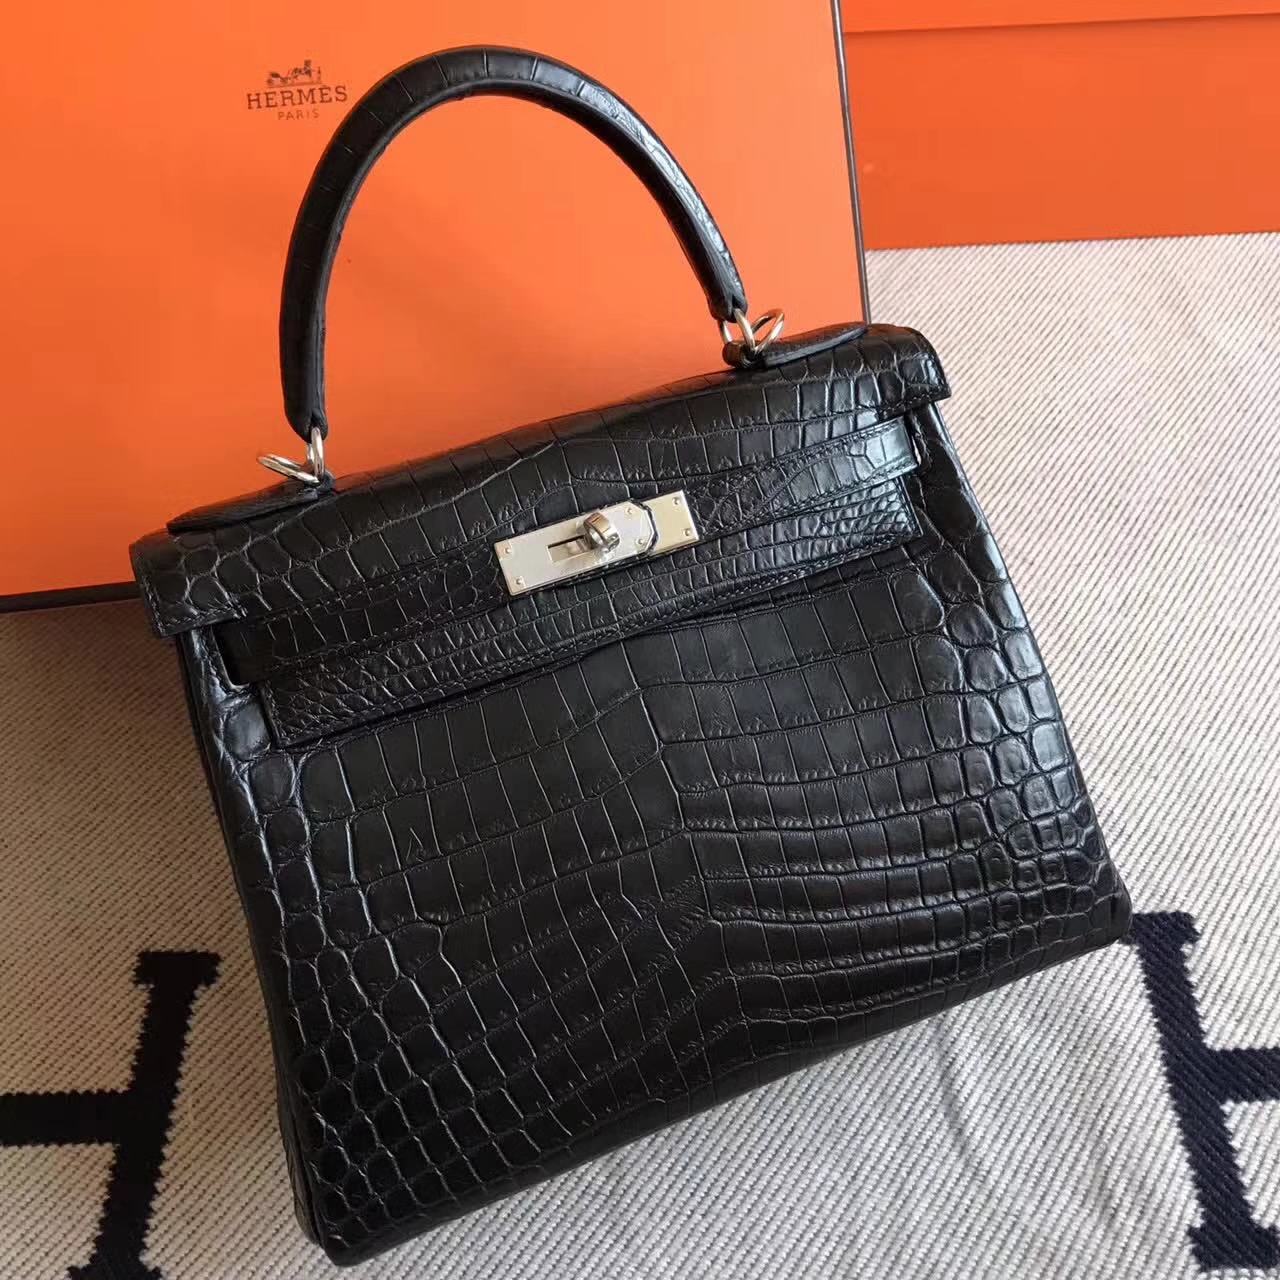 Discount Hermes CK89 Black Crocodile Matt Leather Kelly28cm Handbag